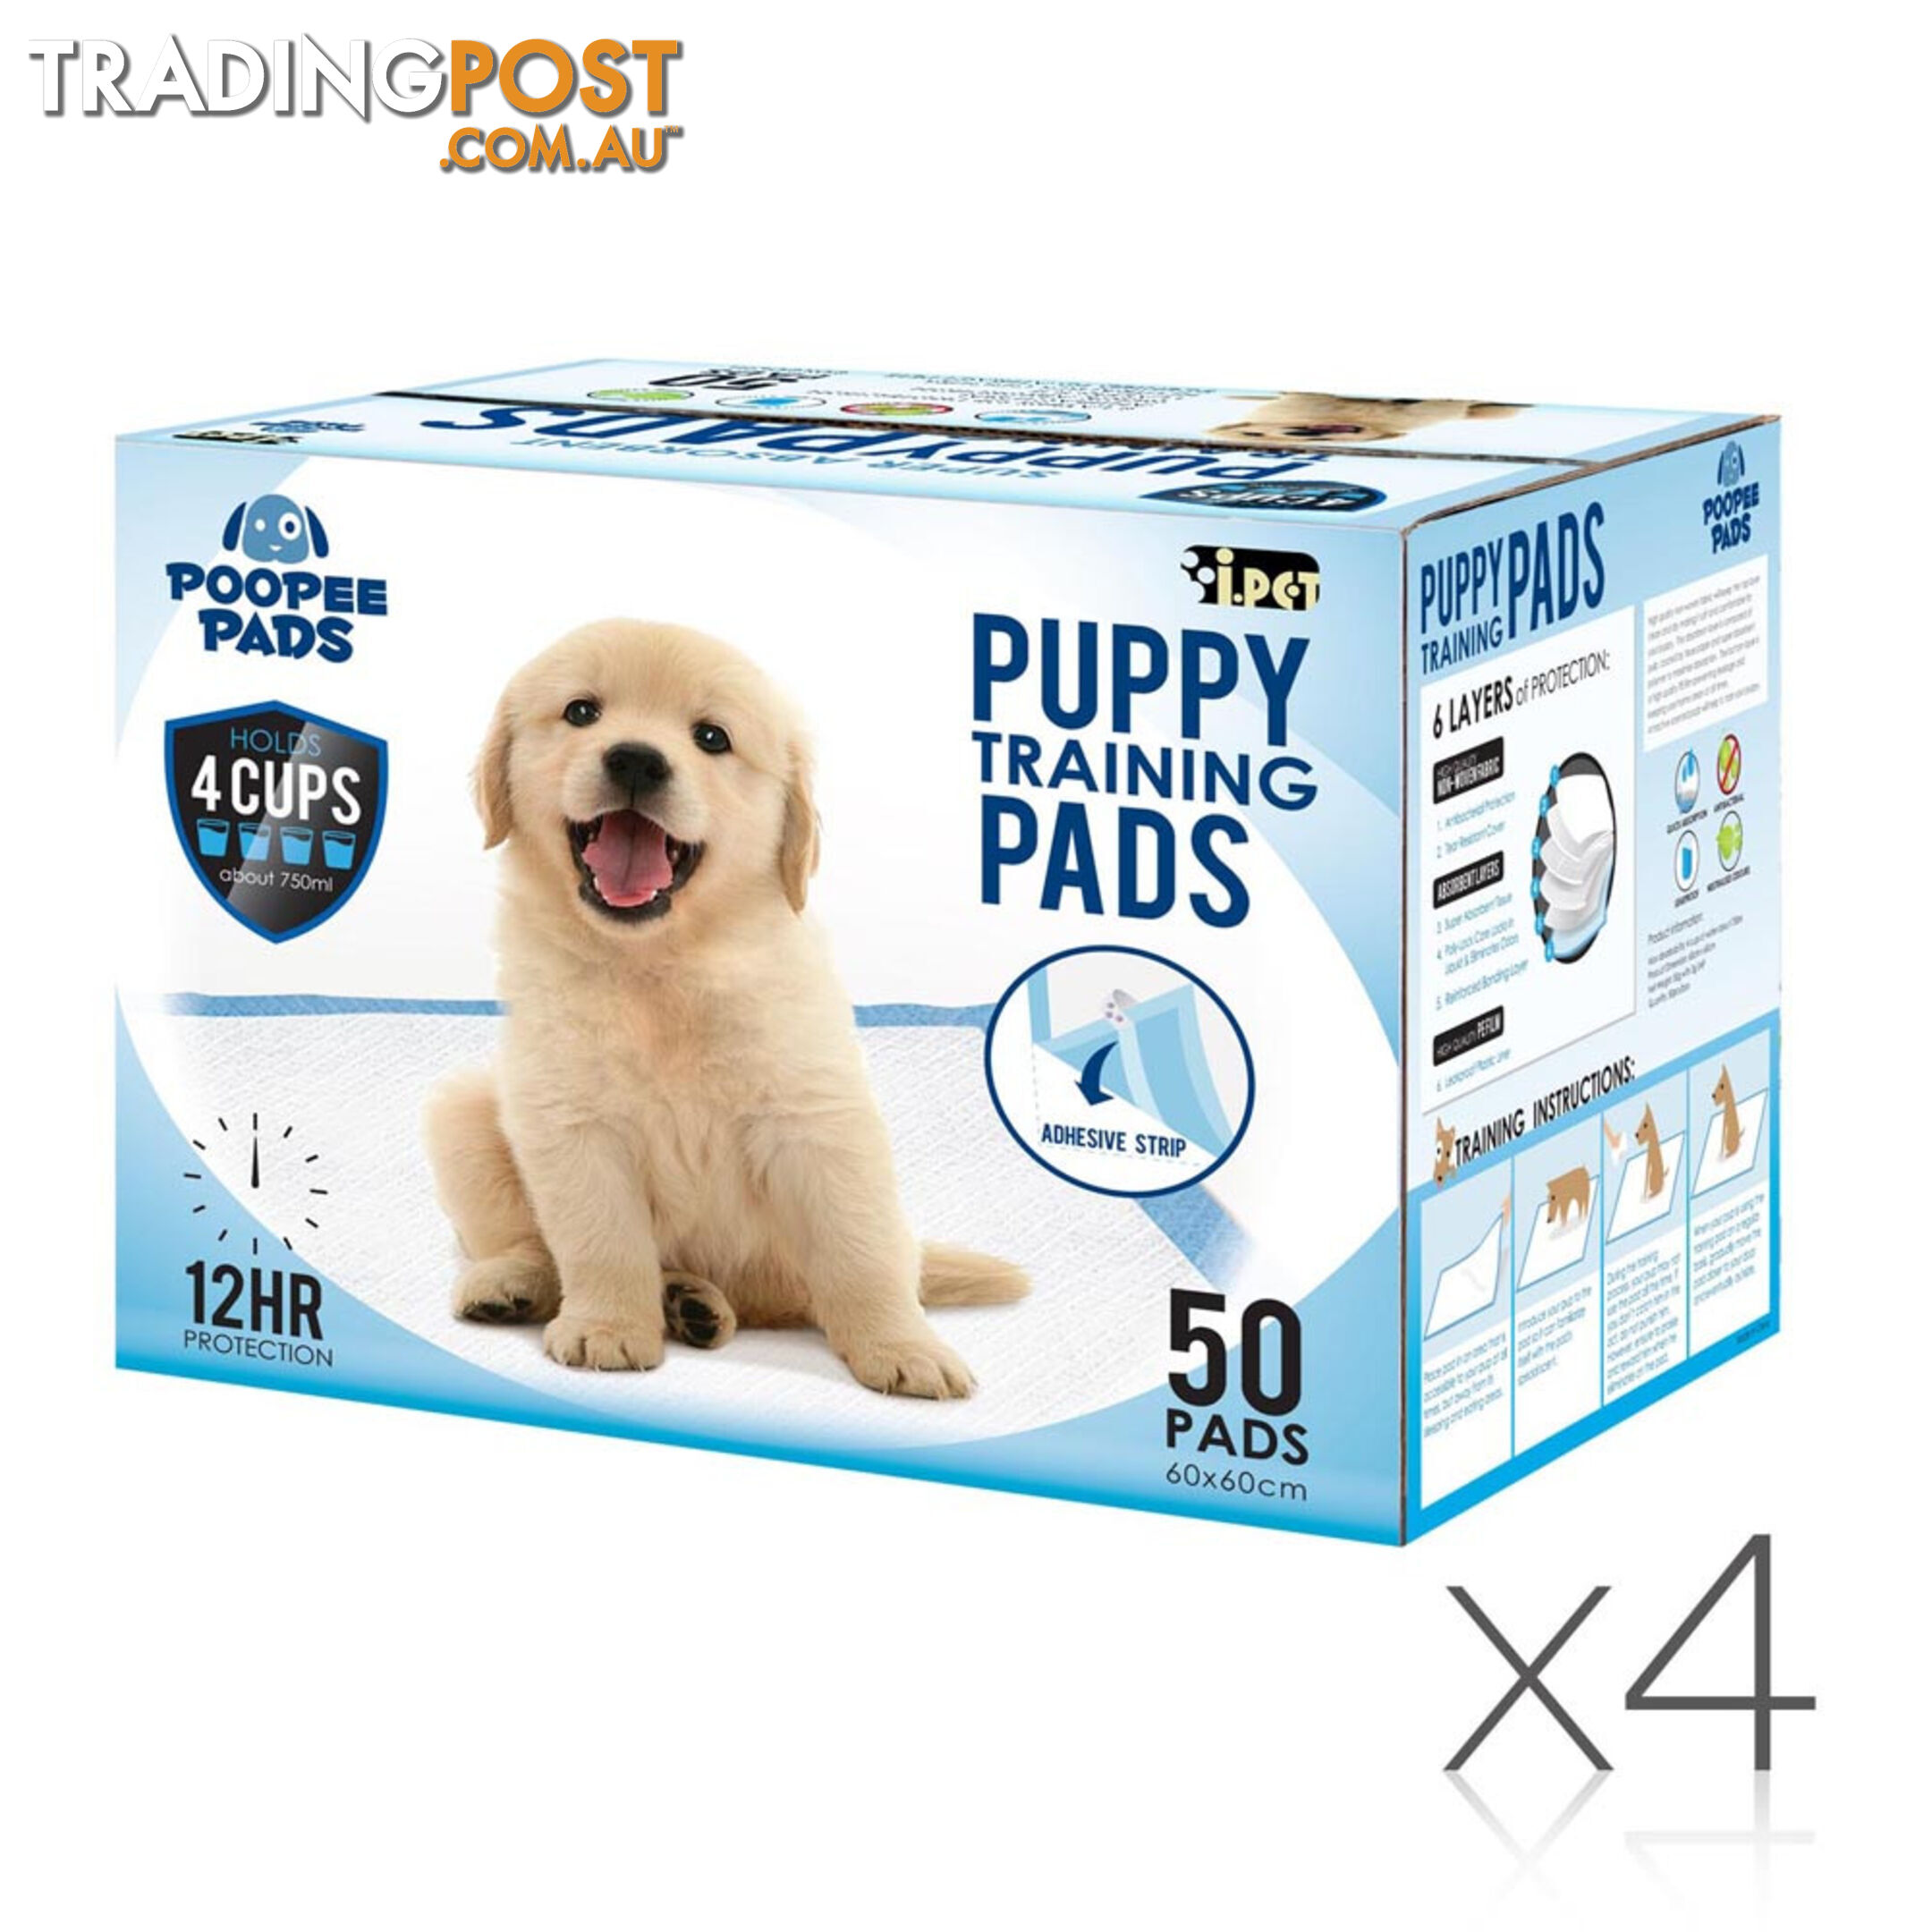 200 Puppy Pet Dog Toilet Training Pads Blue